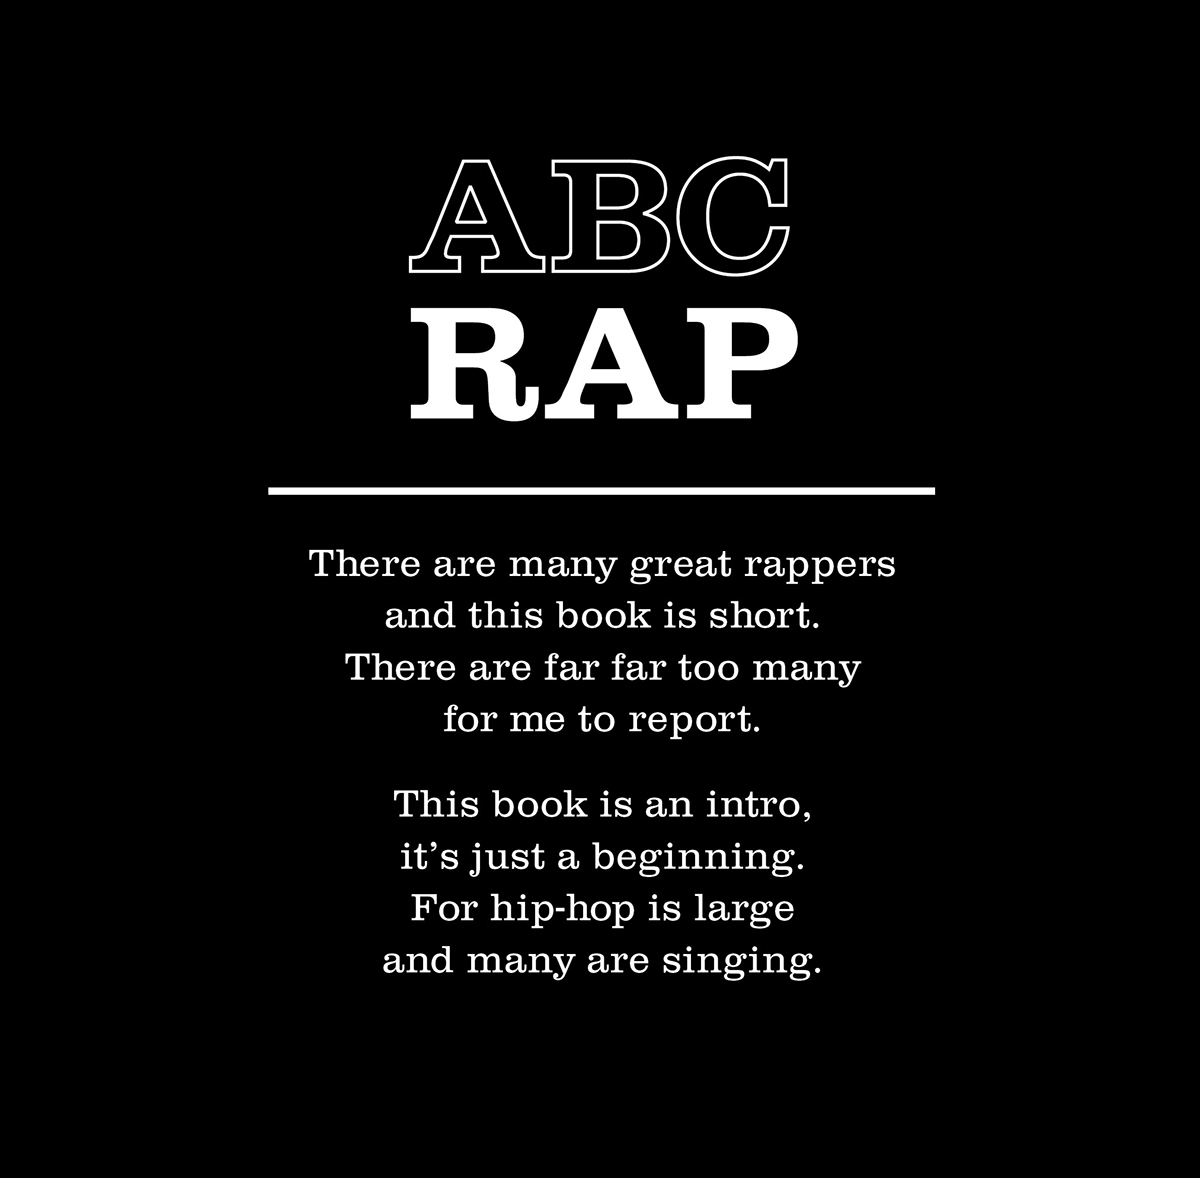 book design children's book kids book ABC ABCs hip hop rap